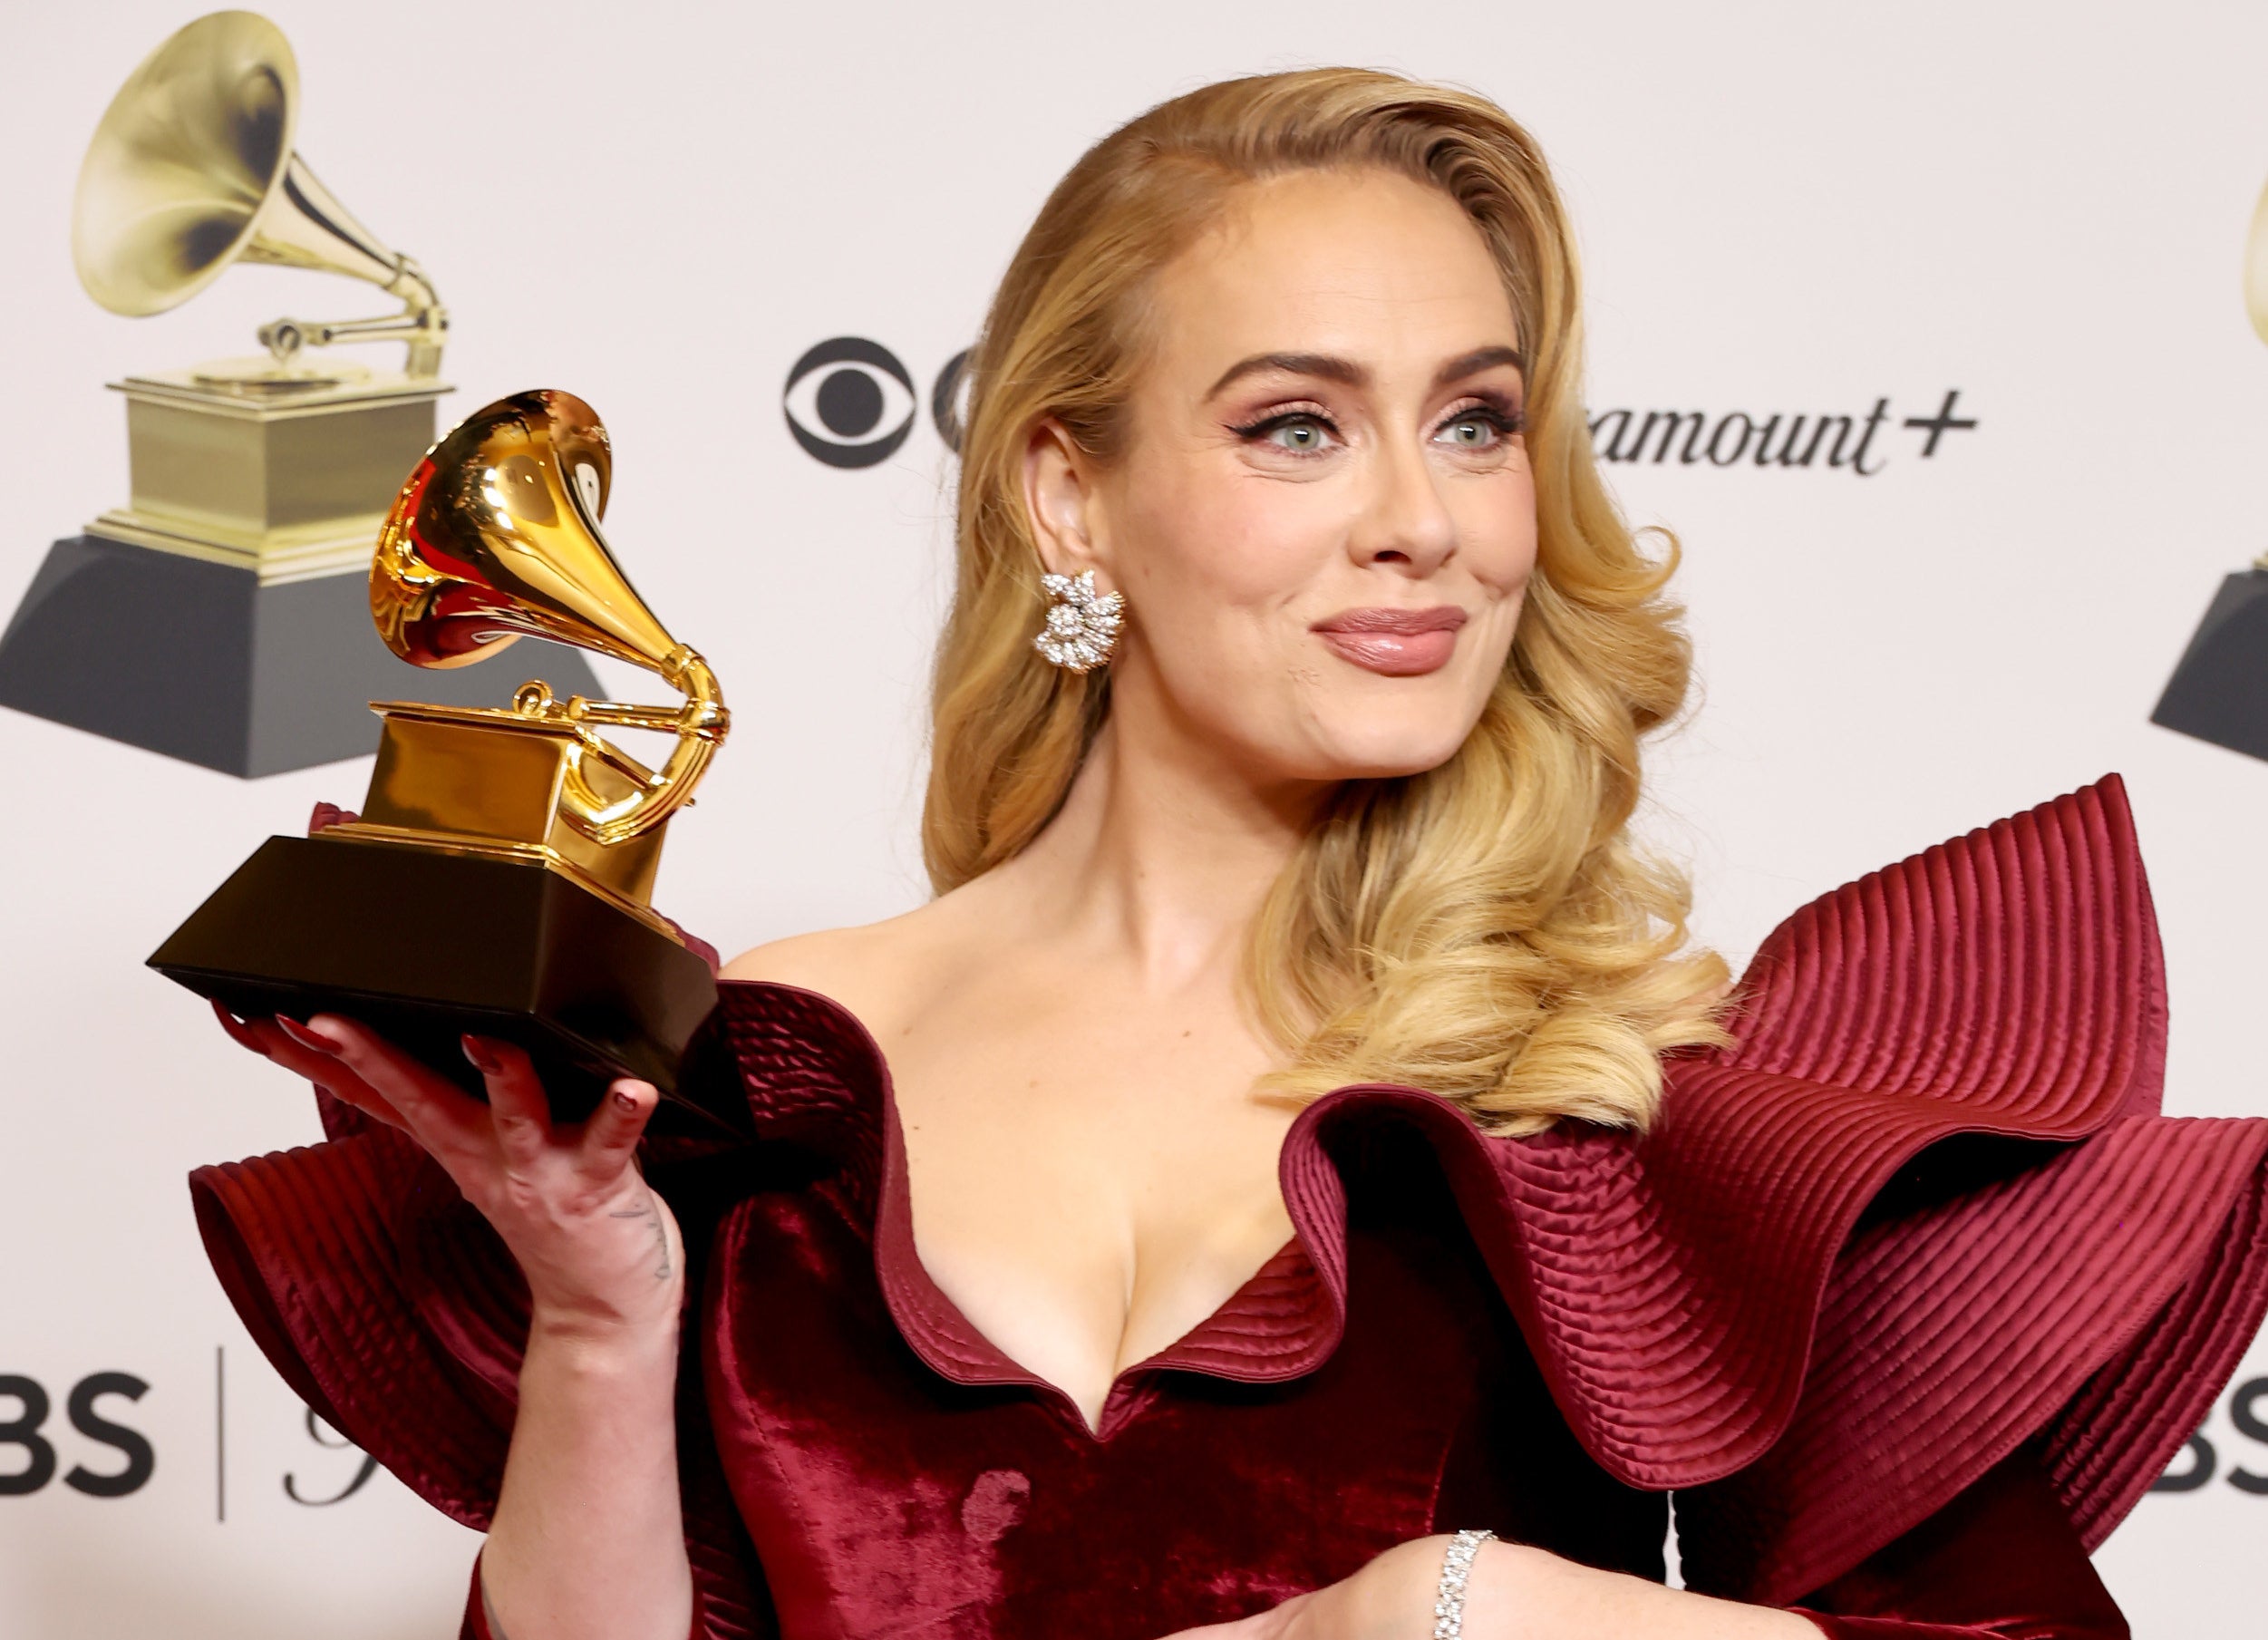 Adele poses with GRAMMY award